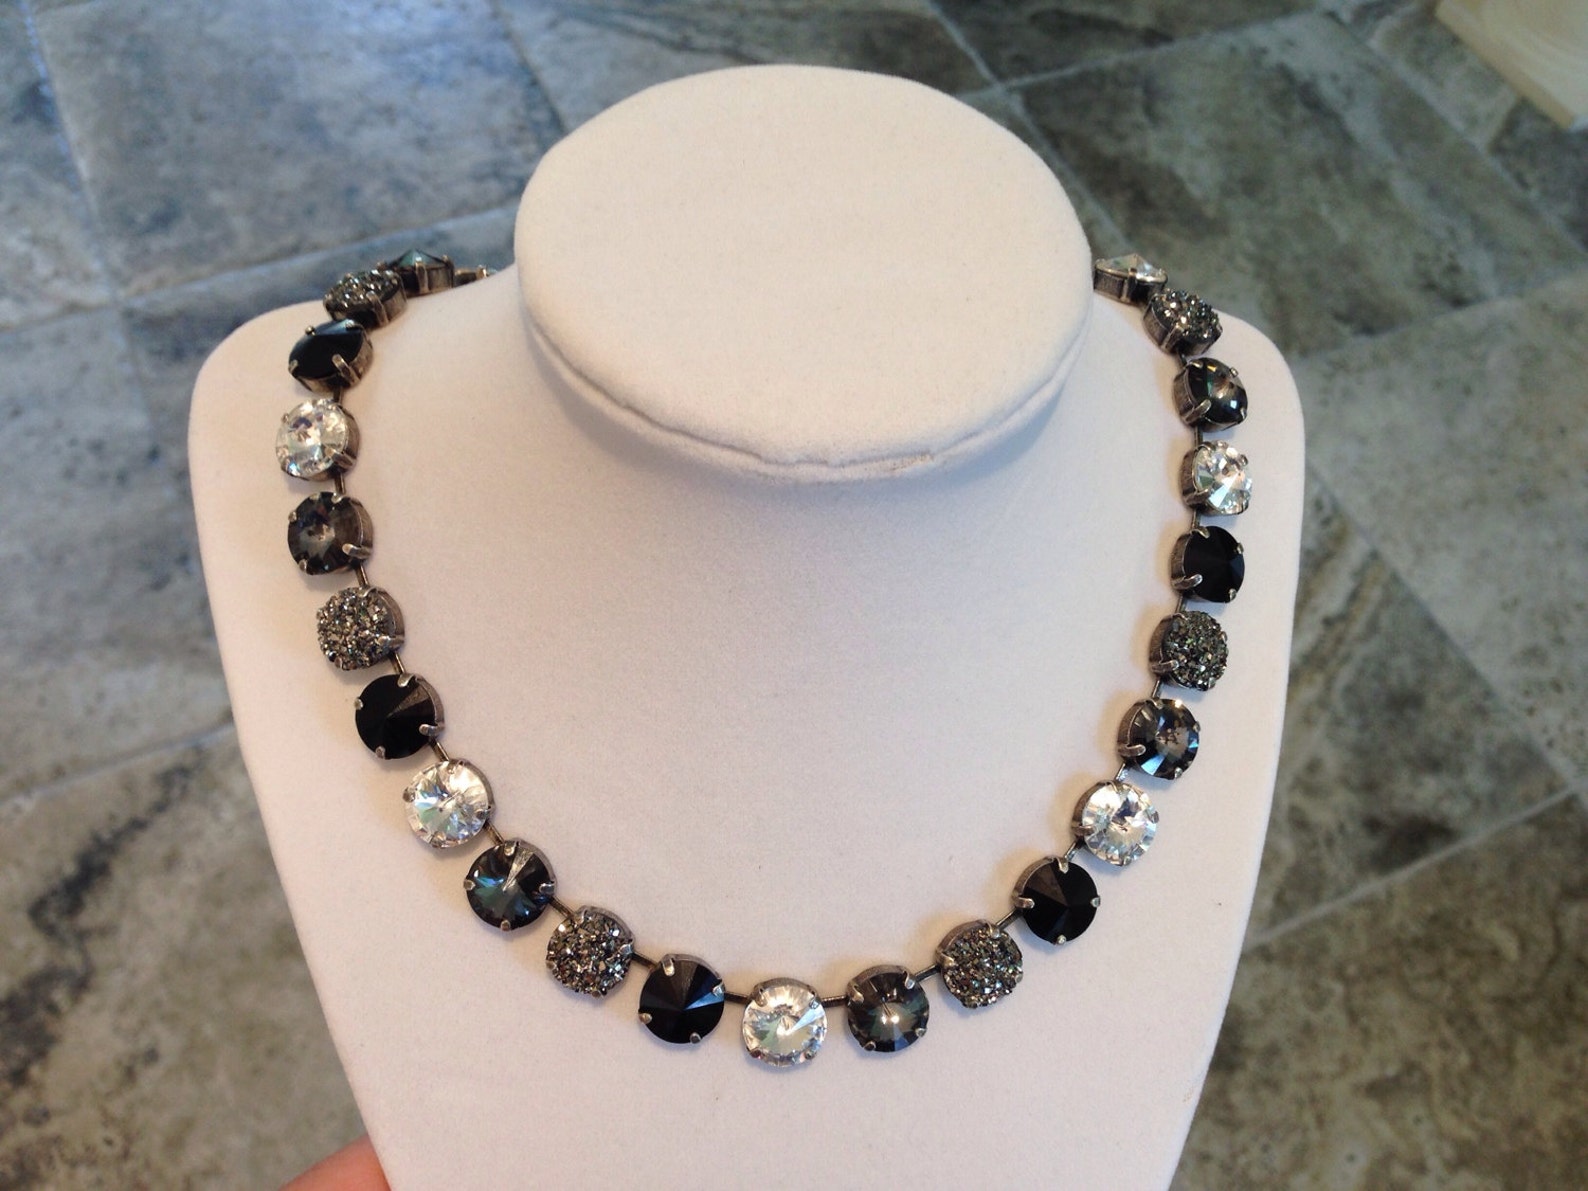 12mm Swarovski Crystal Necklace Black Grey and Crystal - Etsy